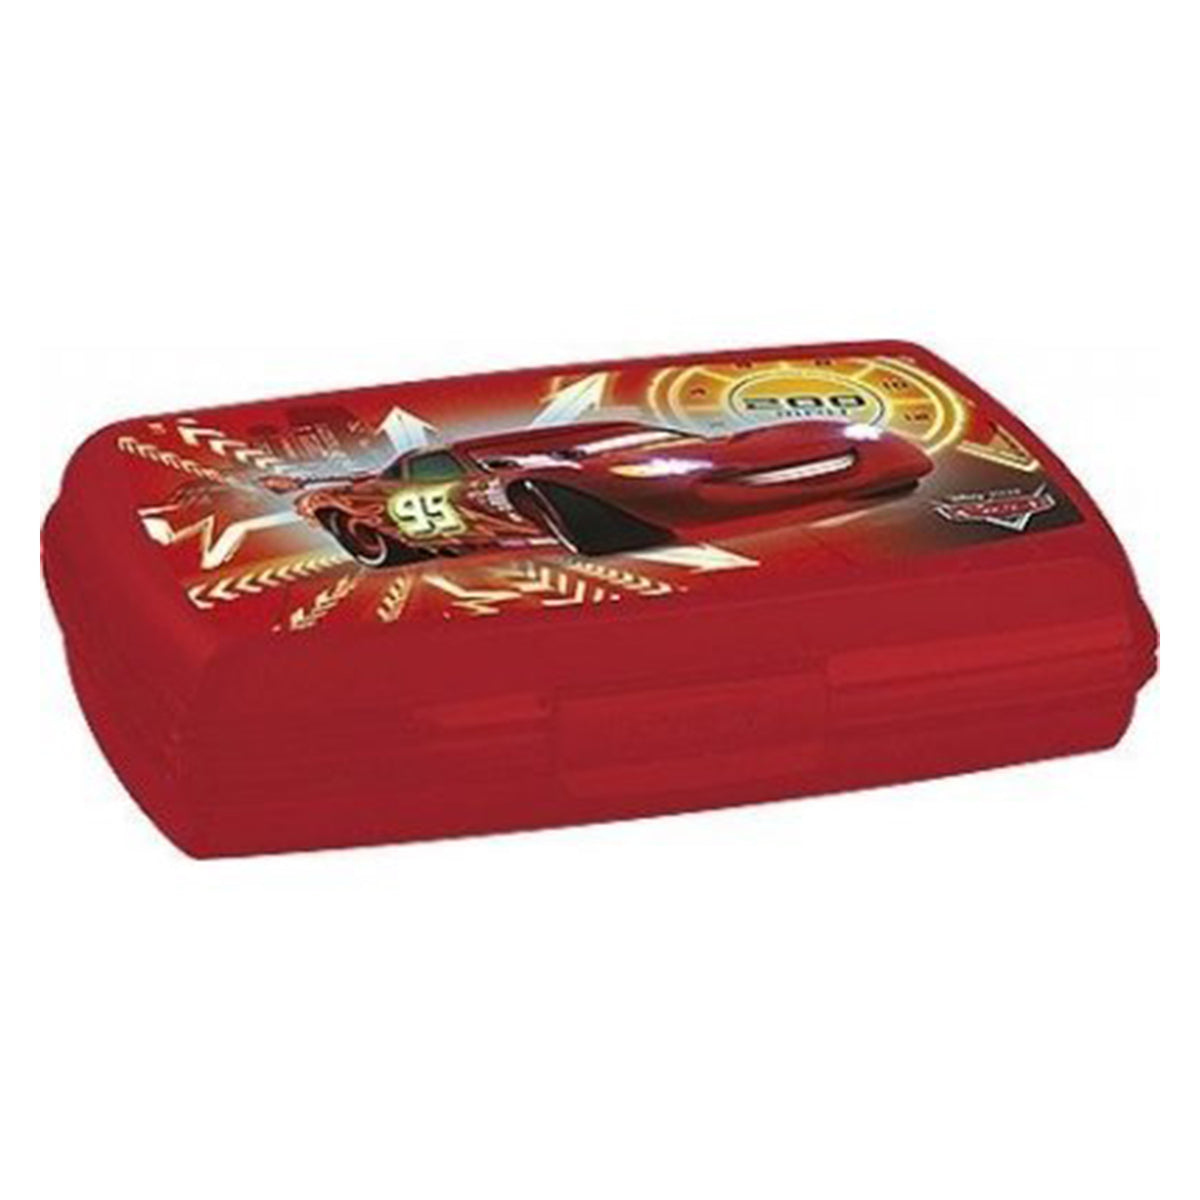 Plastic food box - Red